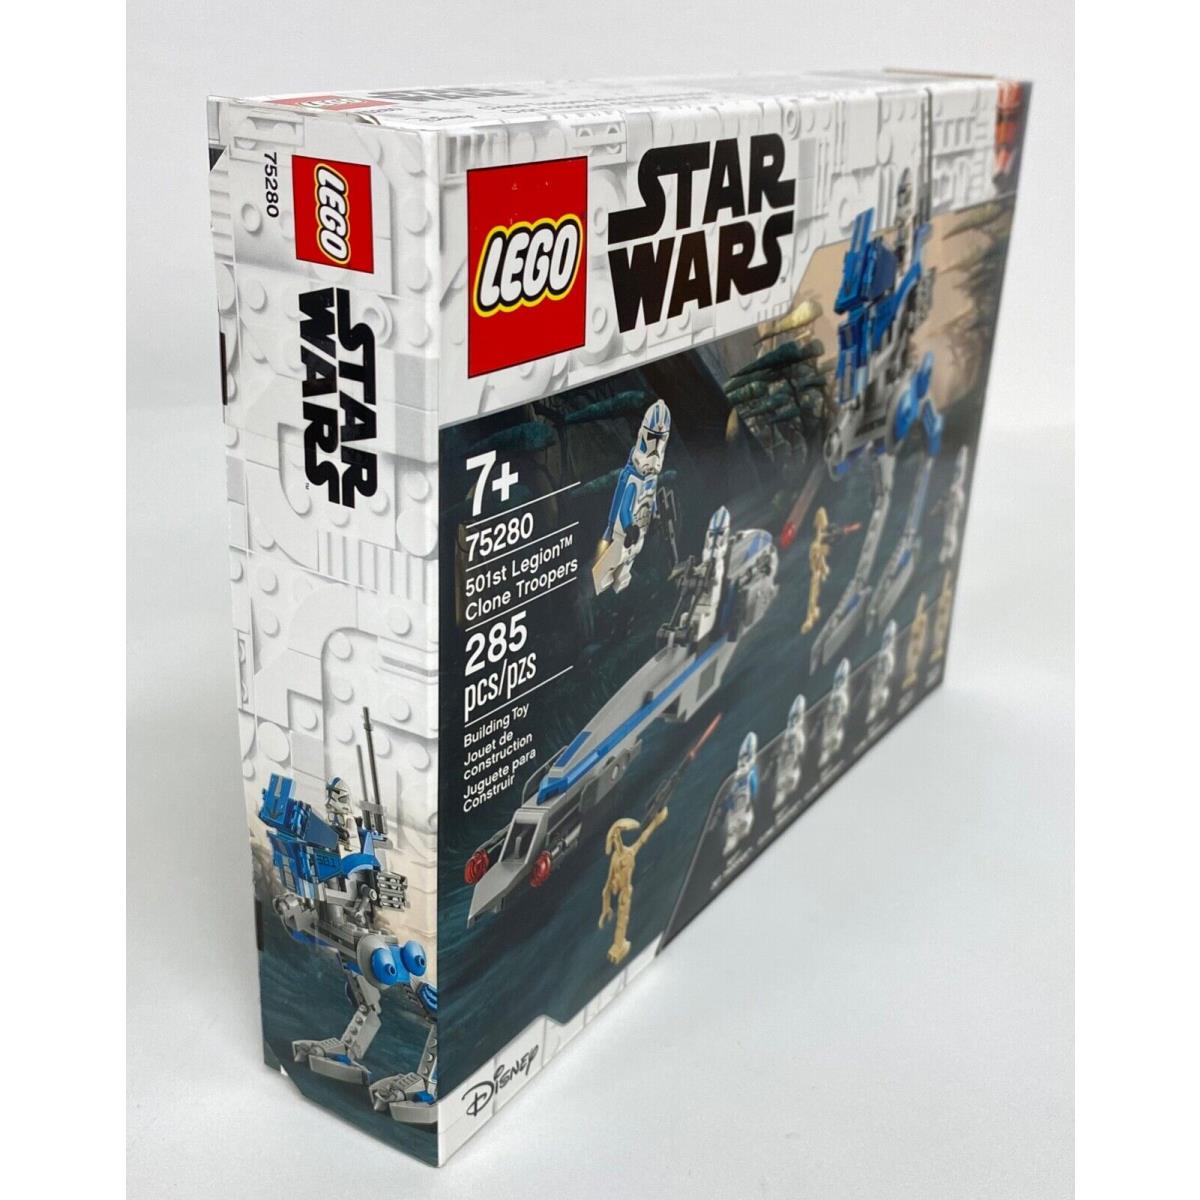 Lego 75280 Star Wars 501st Legion Troopers 285 Pcs